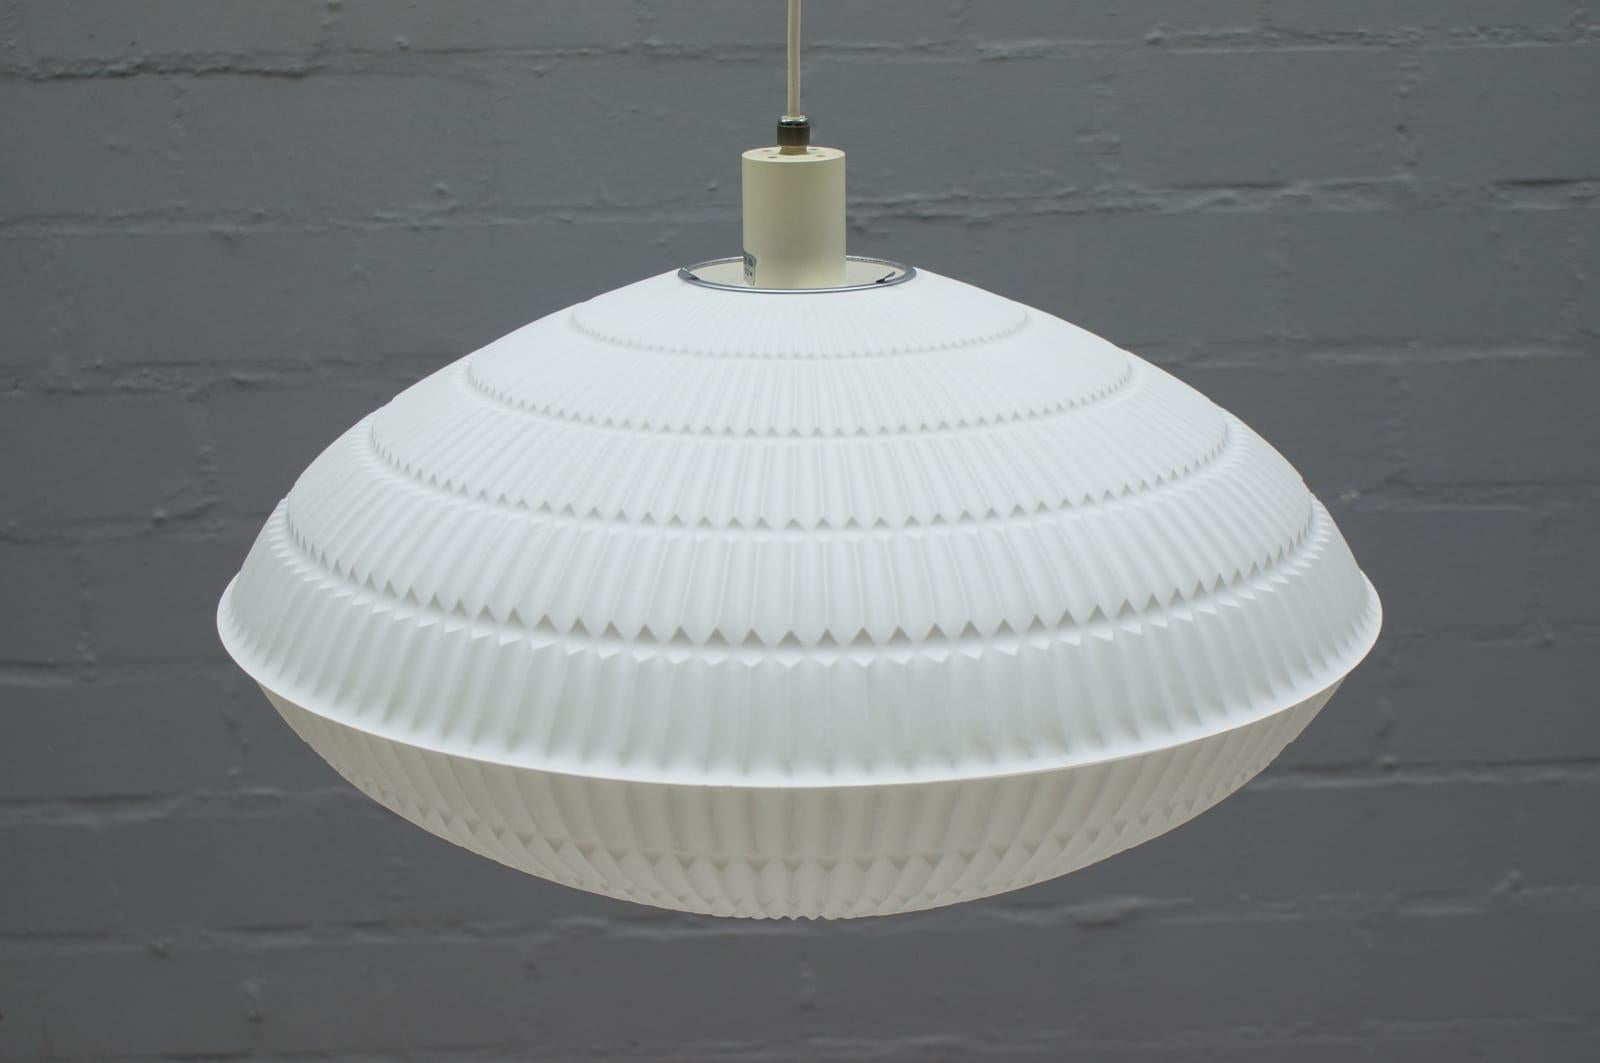 Plastic Geometric Pendant Lamp by Aloys F. Gangkofner for Erco Leuchten, Germany, 1960s For Sale